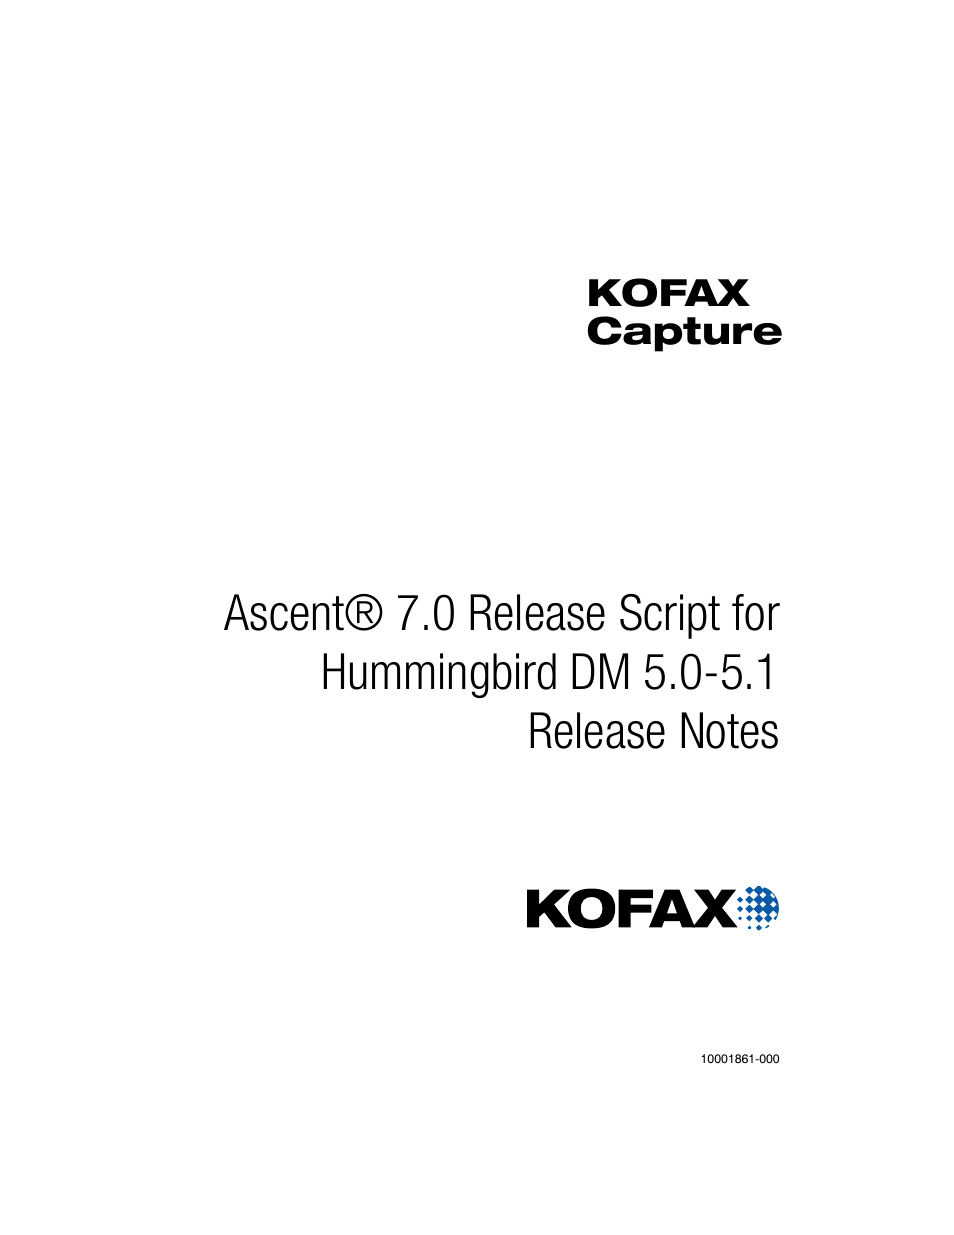 Kofax Ascen 7.0 Release Script for Hummingbird DM 5.0-5.1 User Manual | 46 pages